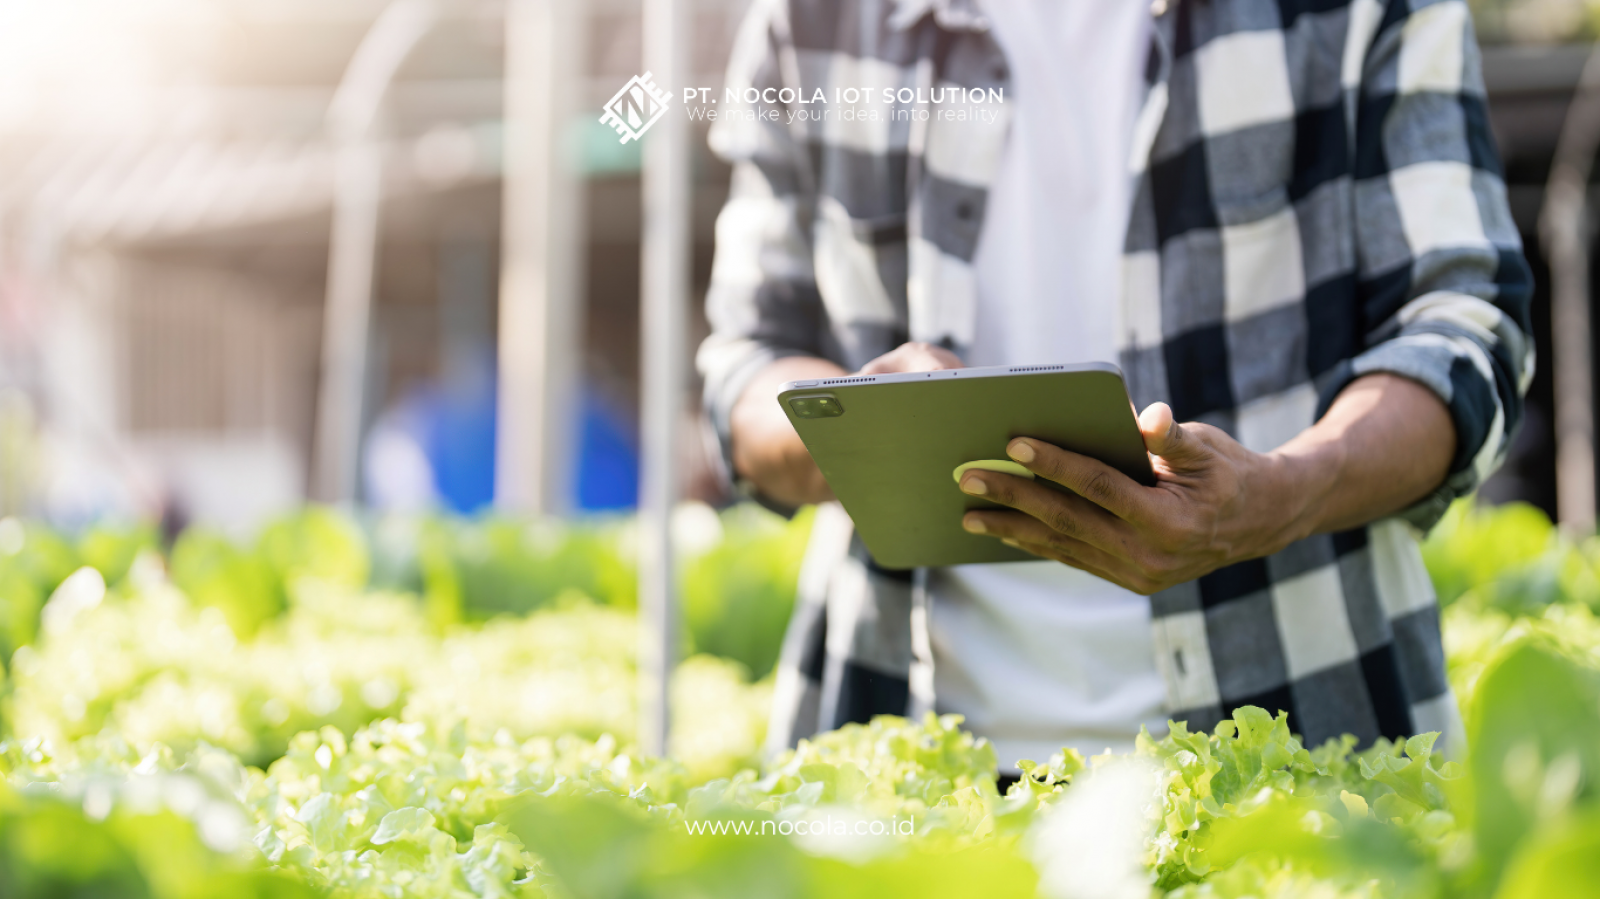 Solusi Smart Farming Nocola: Transformasi Pertanian dengan Teknologi Terkini Canva